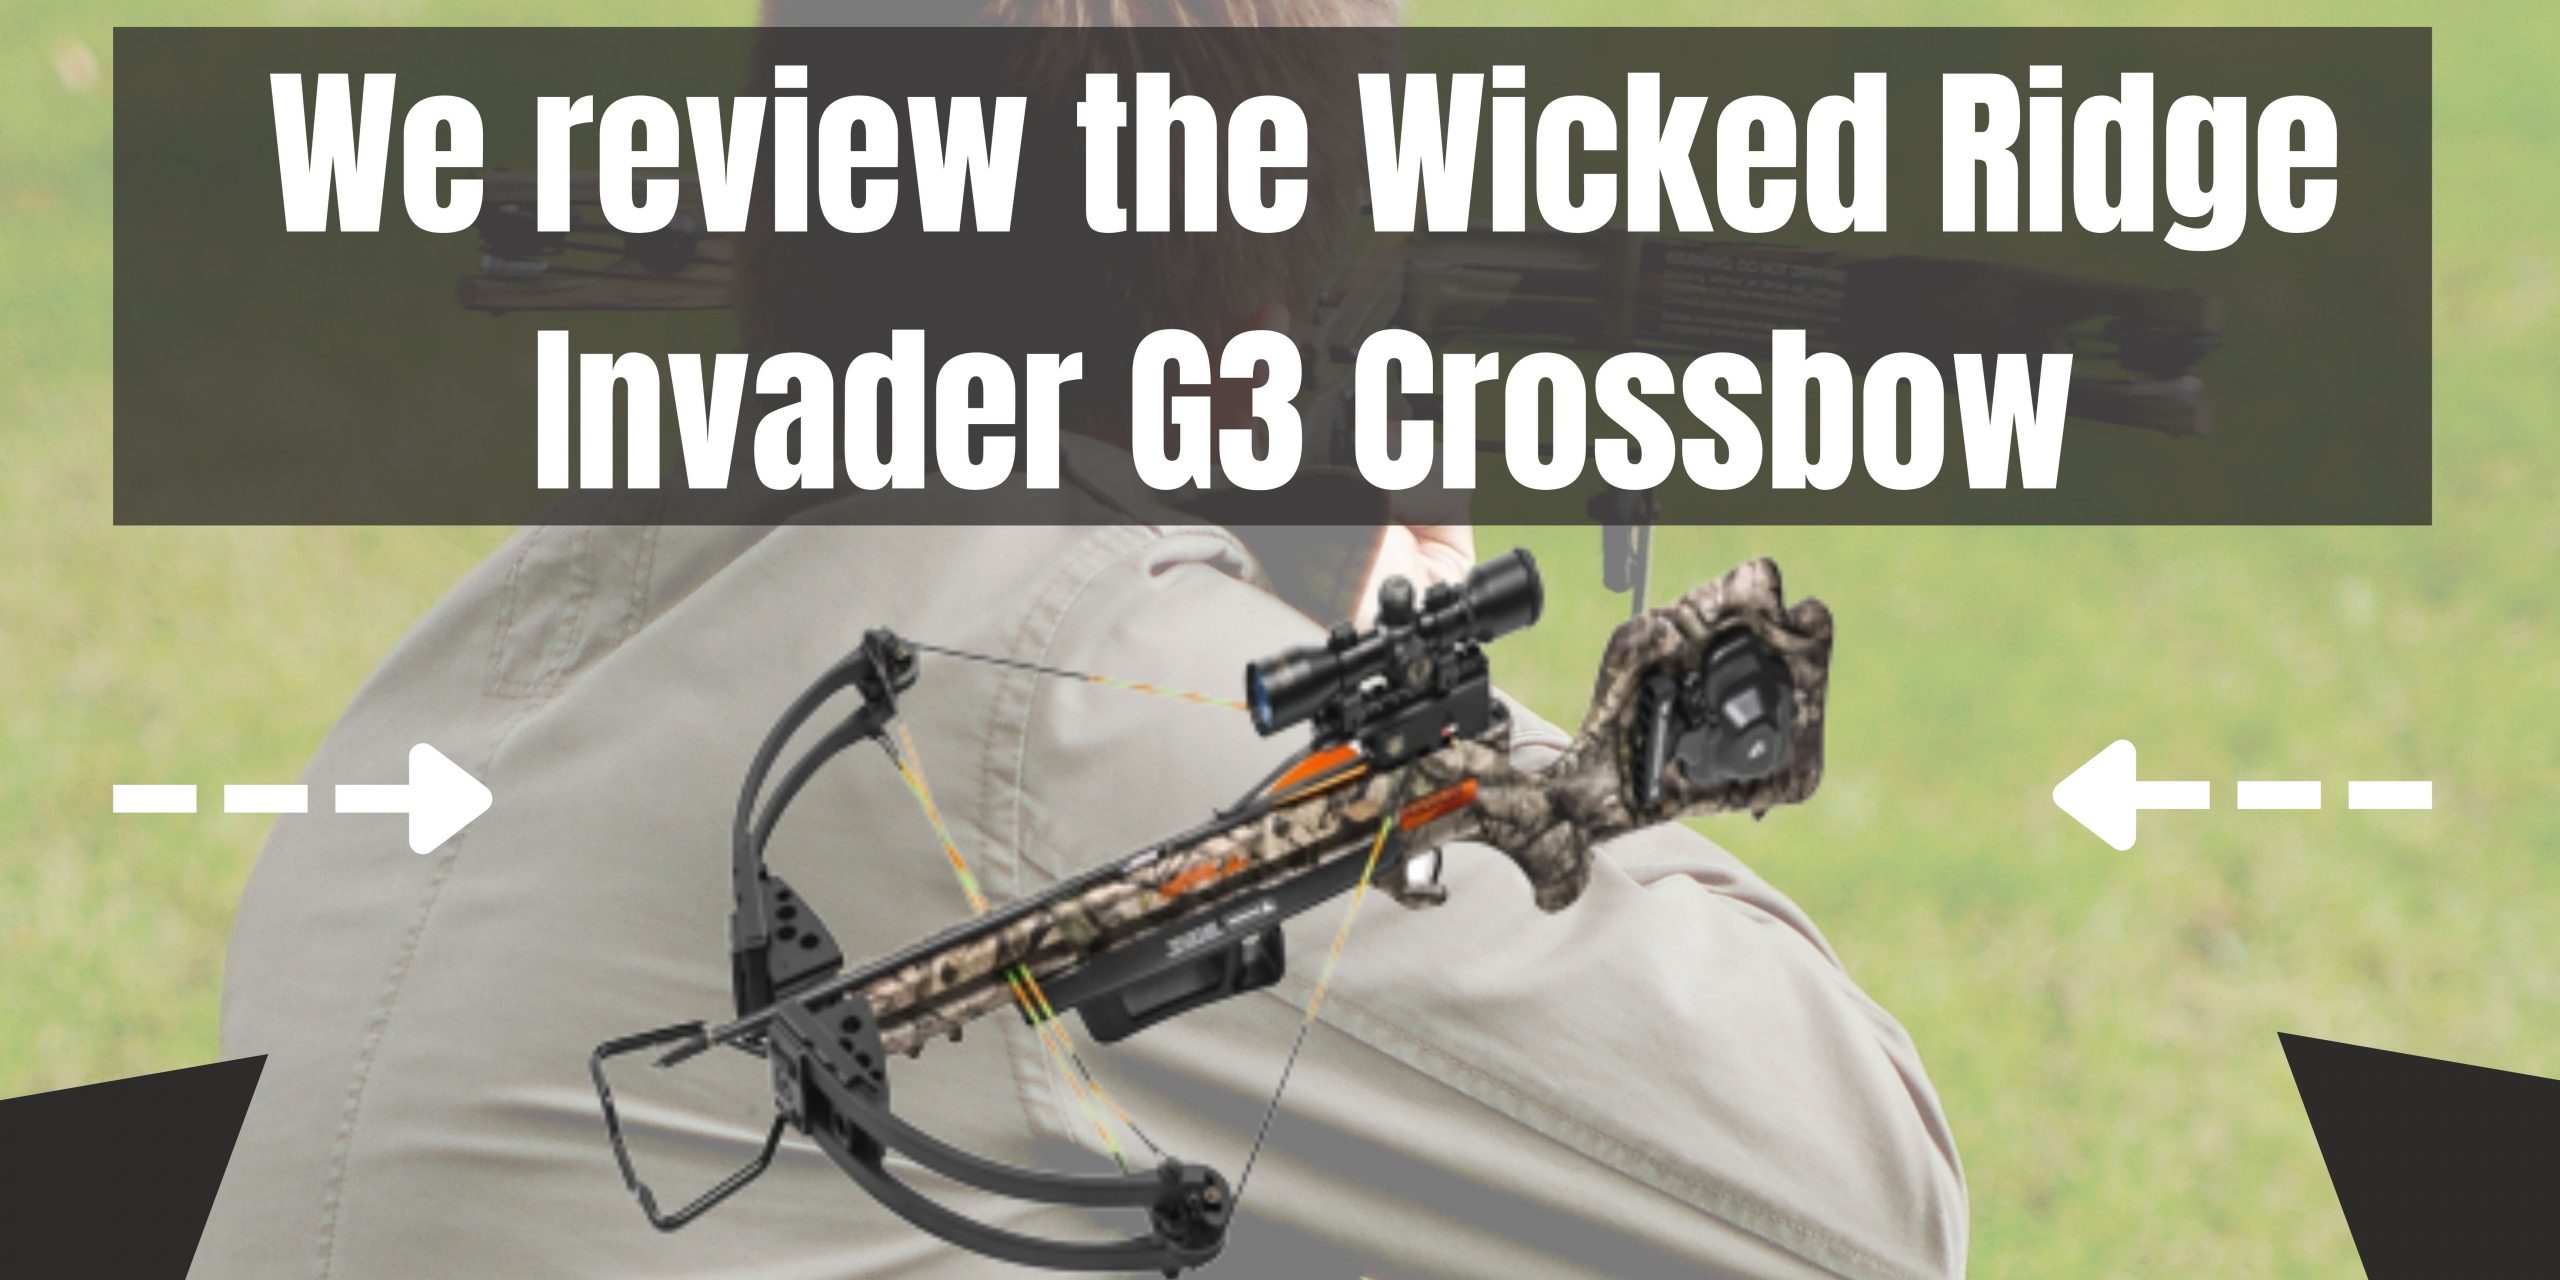 Wicked Ridge Invader G3 Crossbow